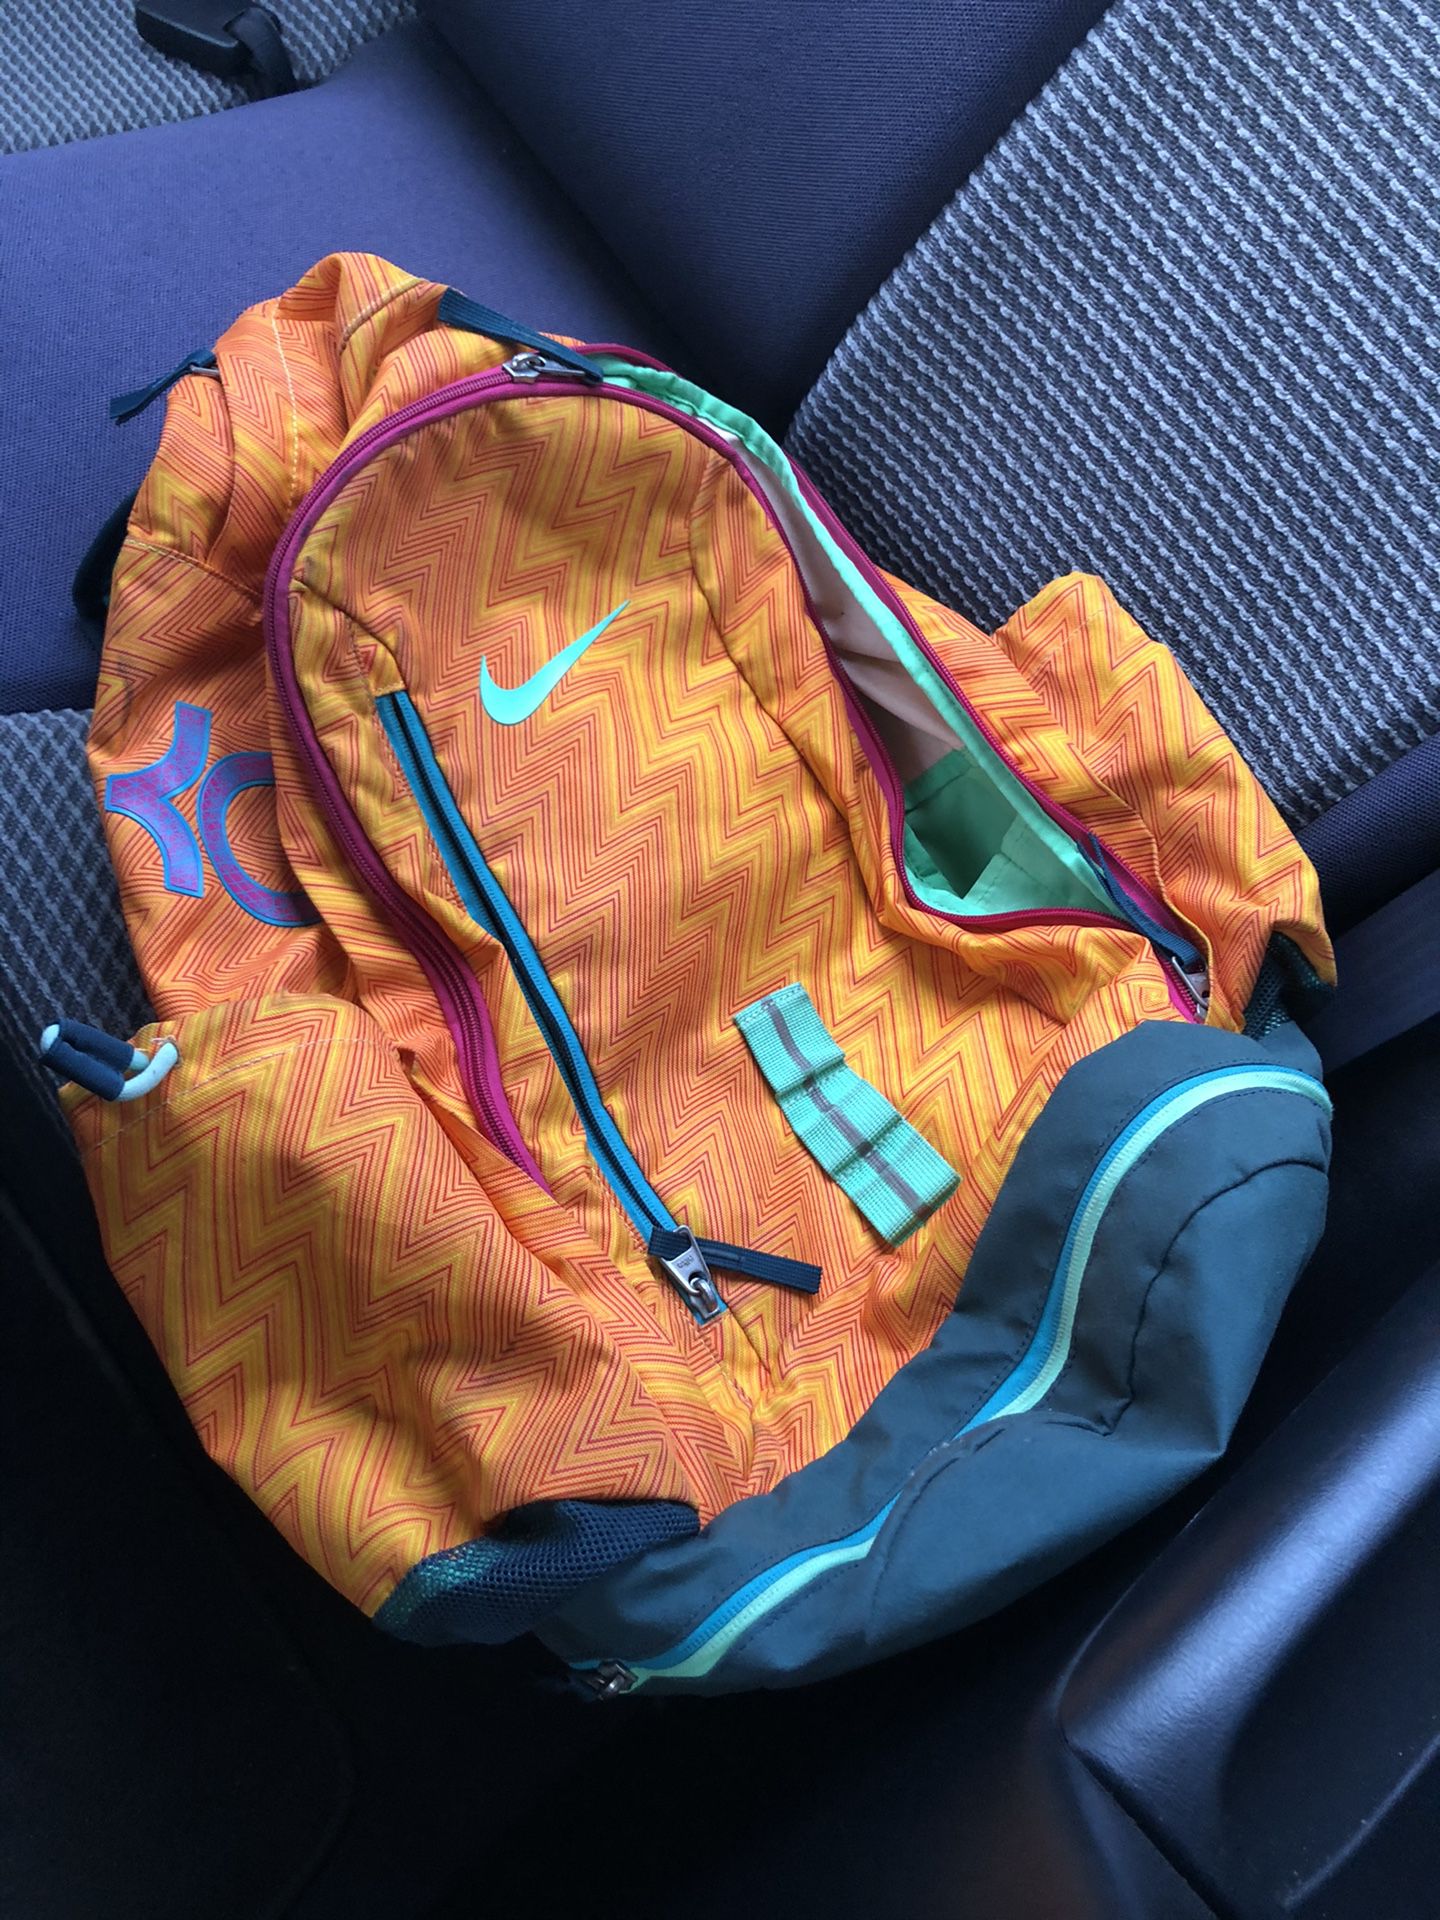 Kevin Durant backpack